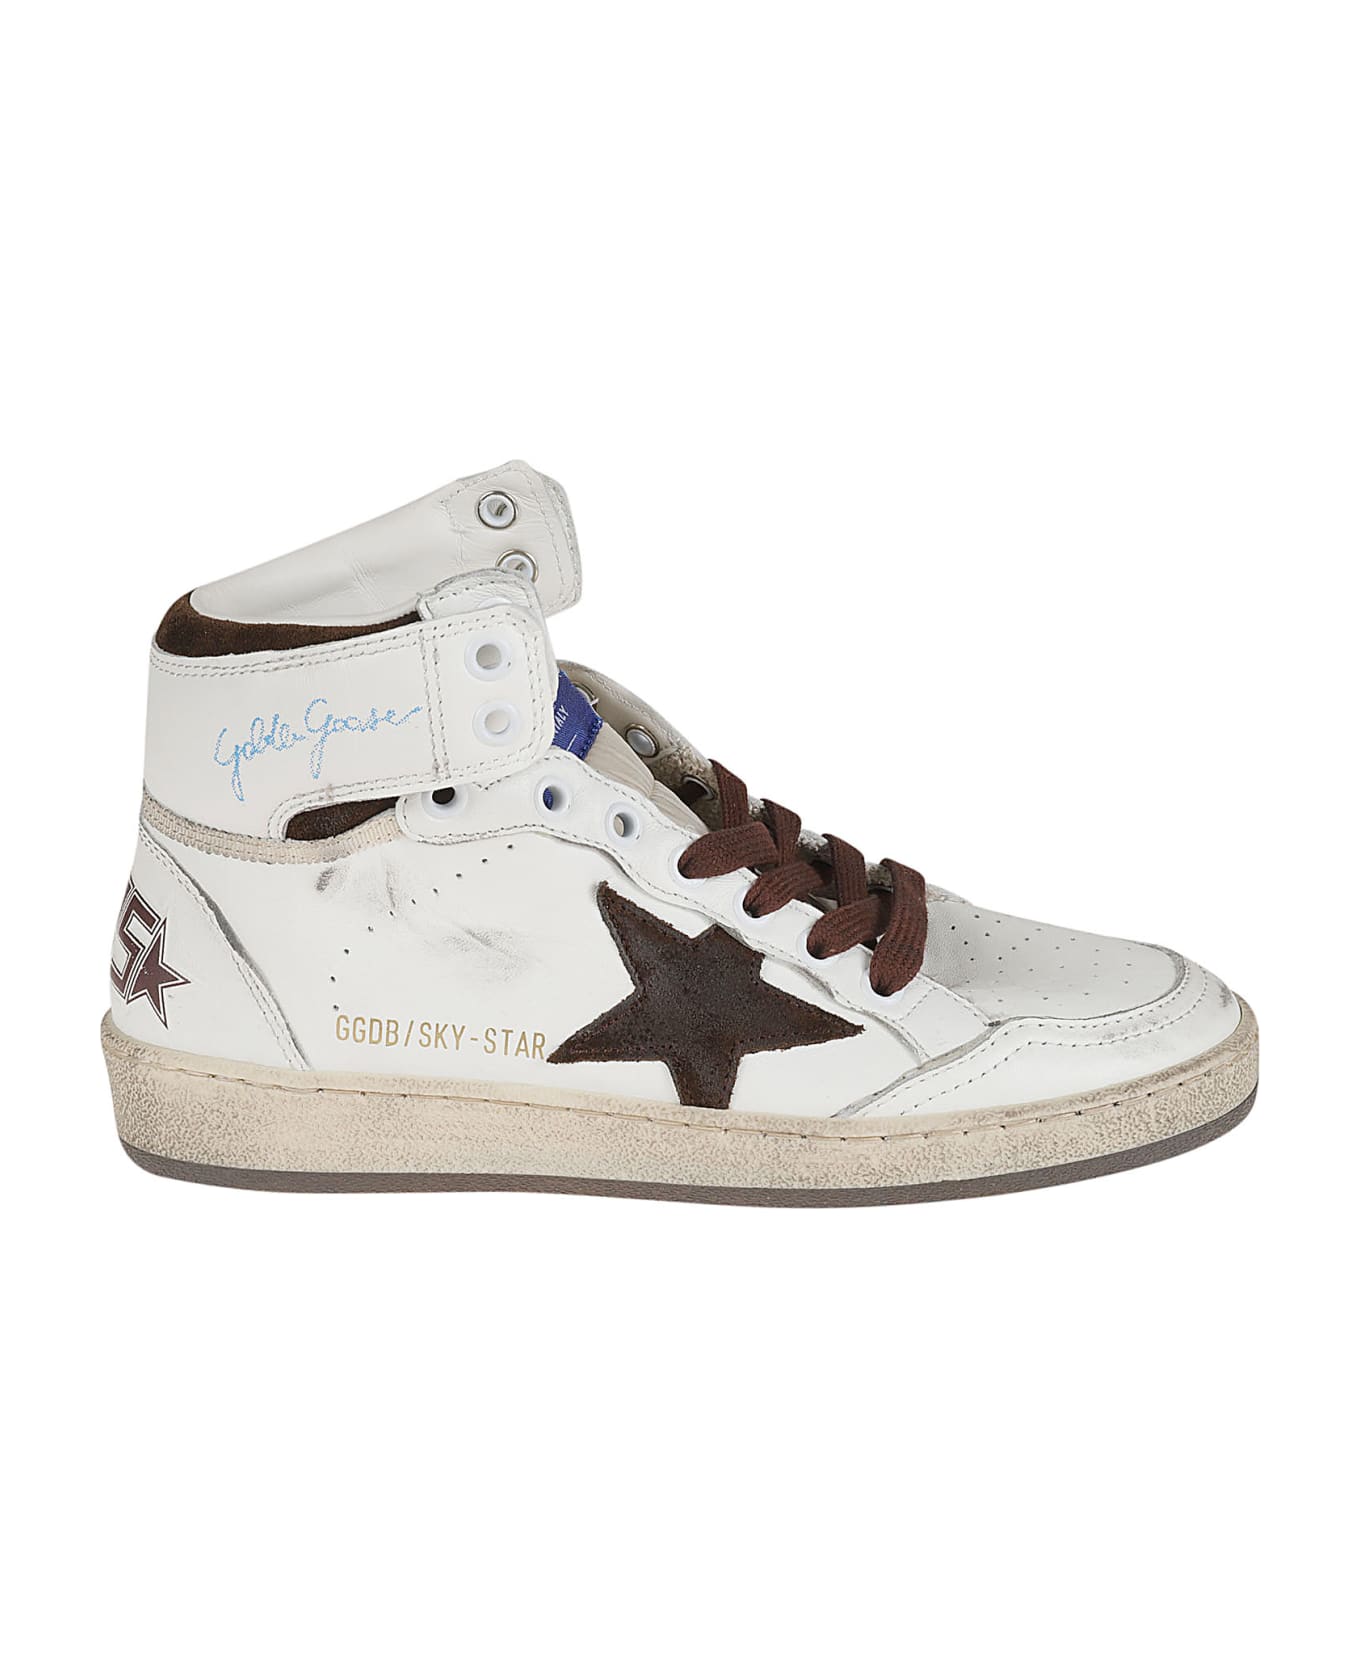 Golden Goose Sky Star Sneakers - White/Beige/Chocolate